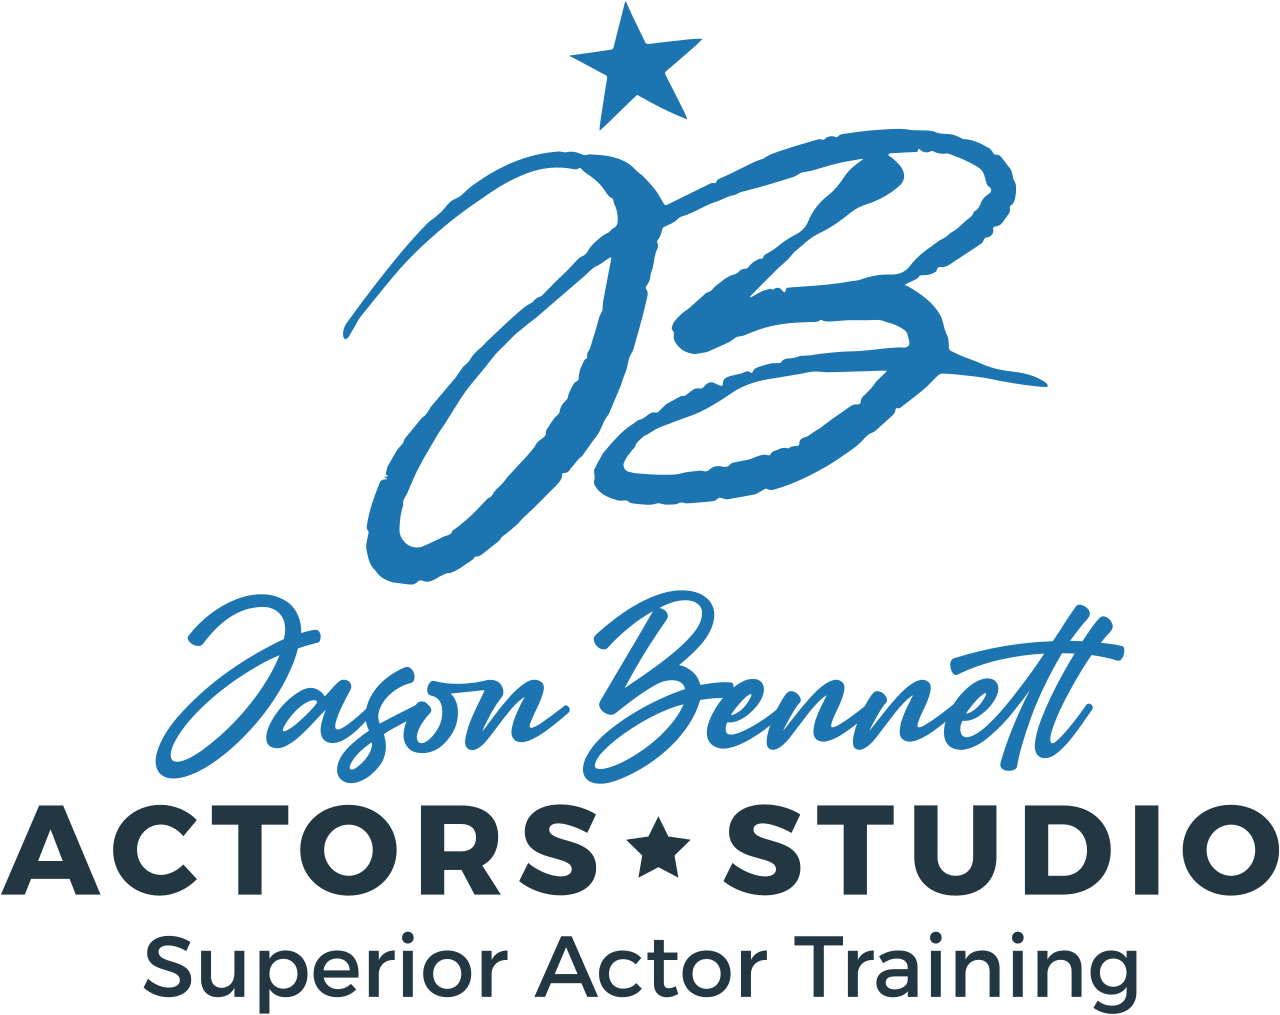 The Jason Bennett Actors Studio's logo